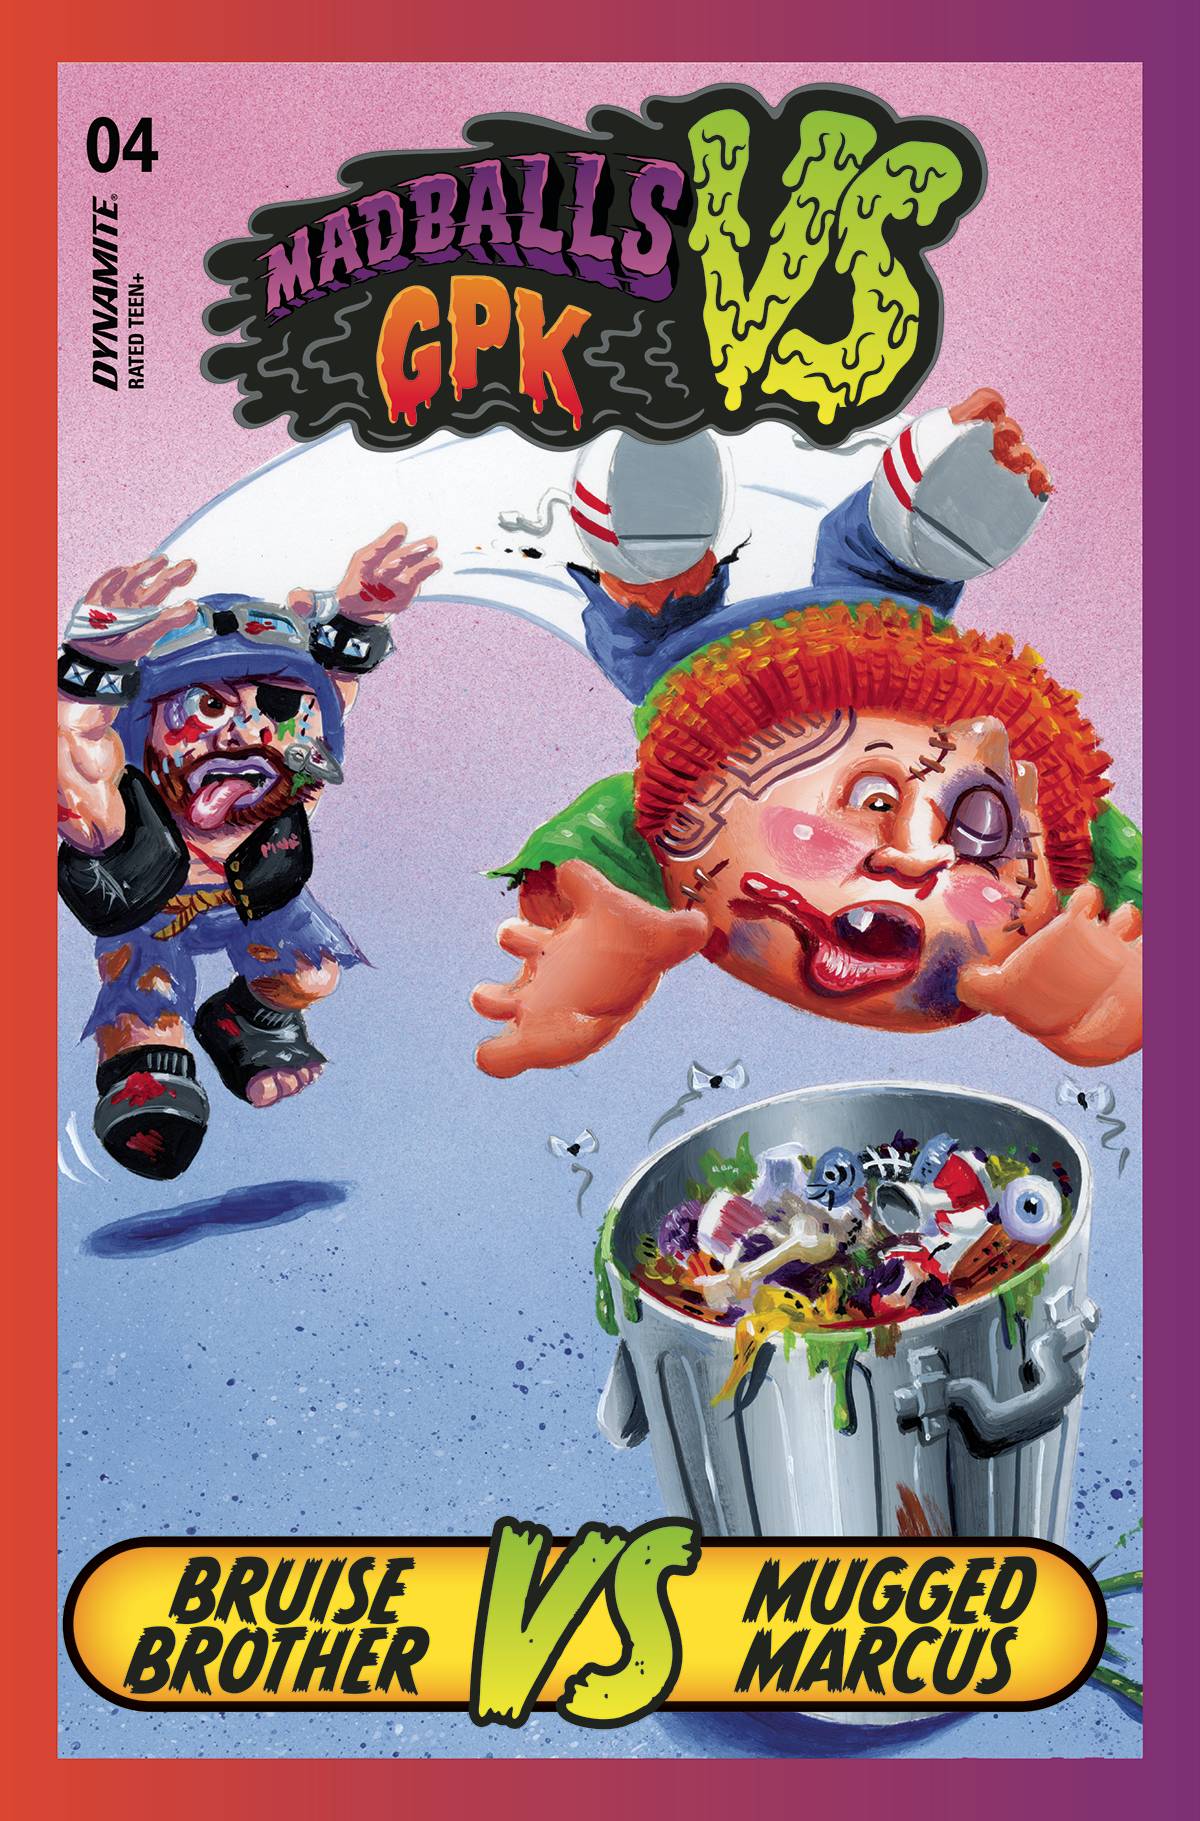 MADBALLS VS GARBAGE PAIL KIDS #4 CVR B CROSBY - The Comic Construct